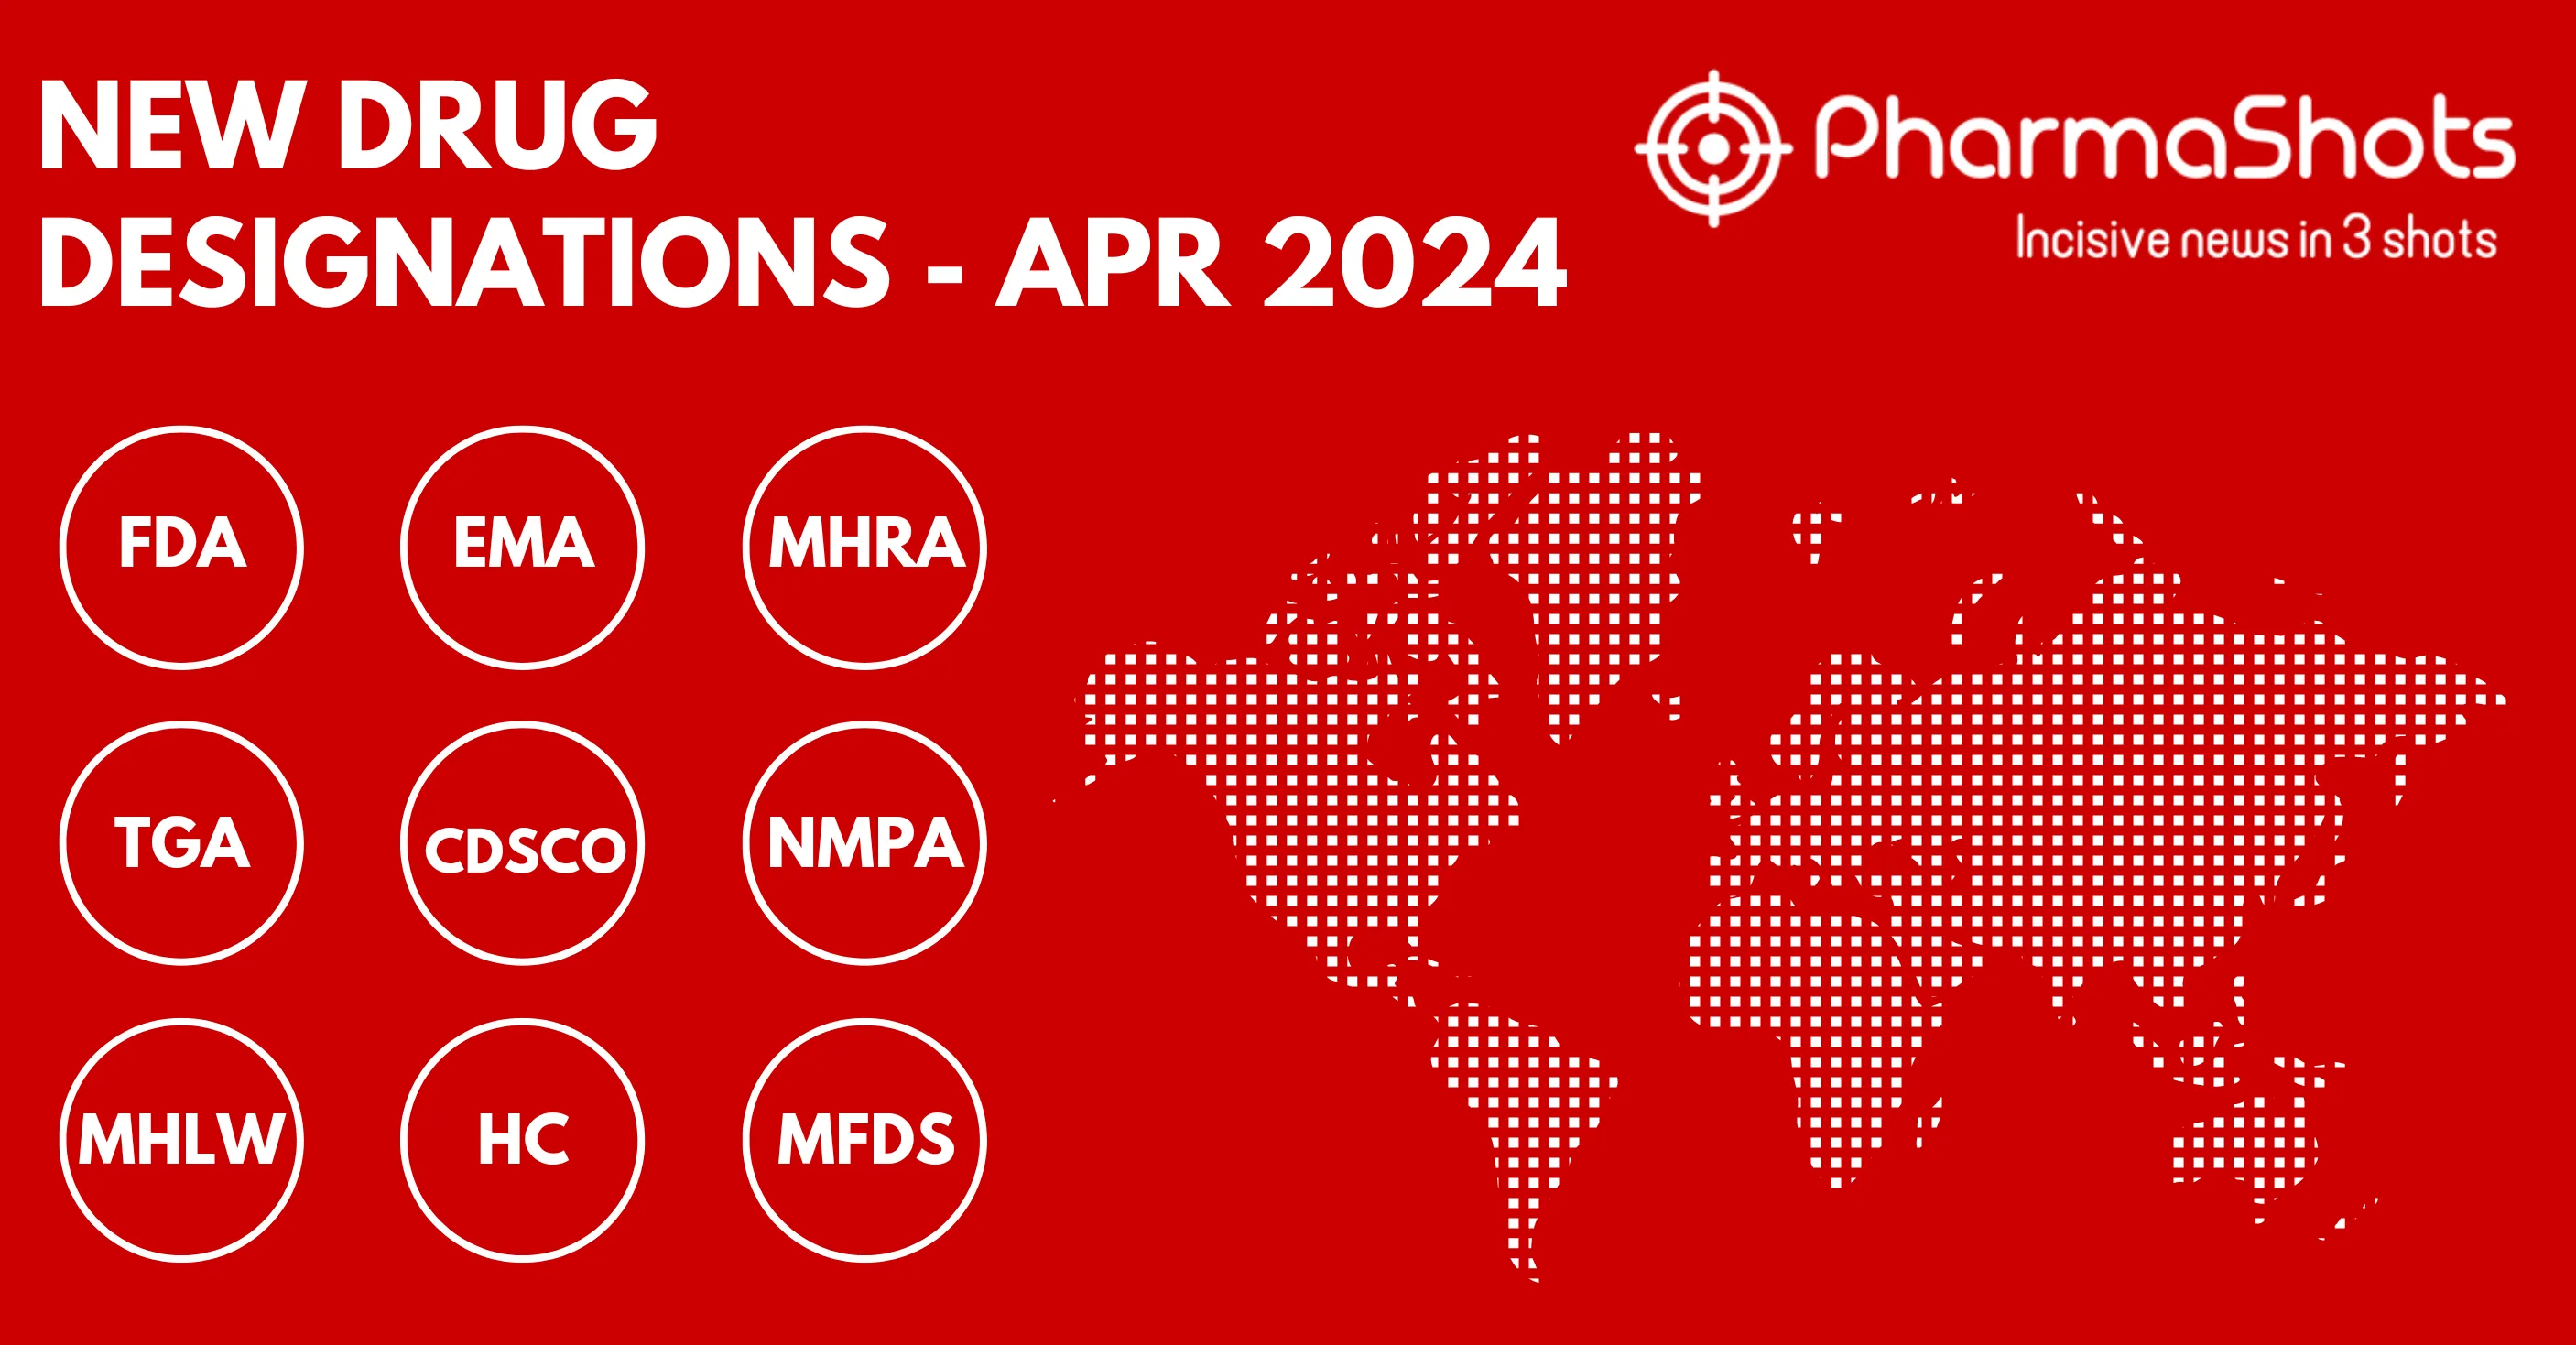 New Drug Designations - April 2024